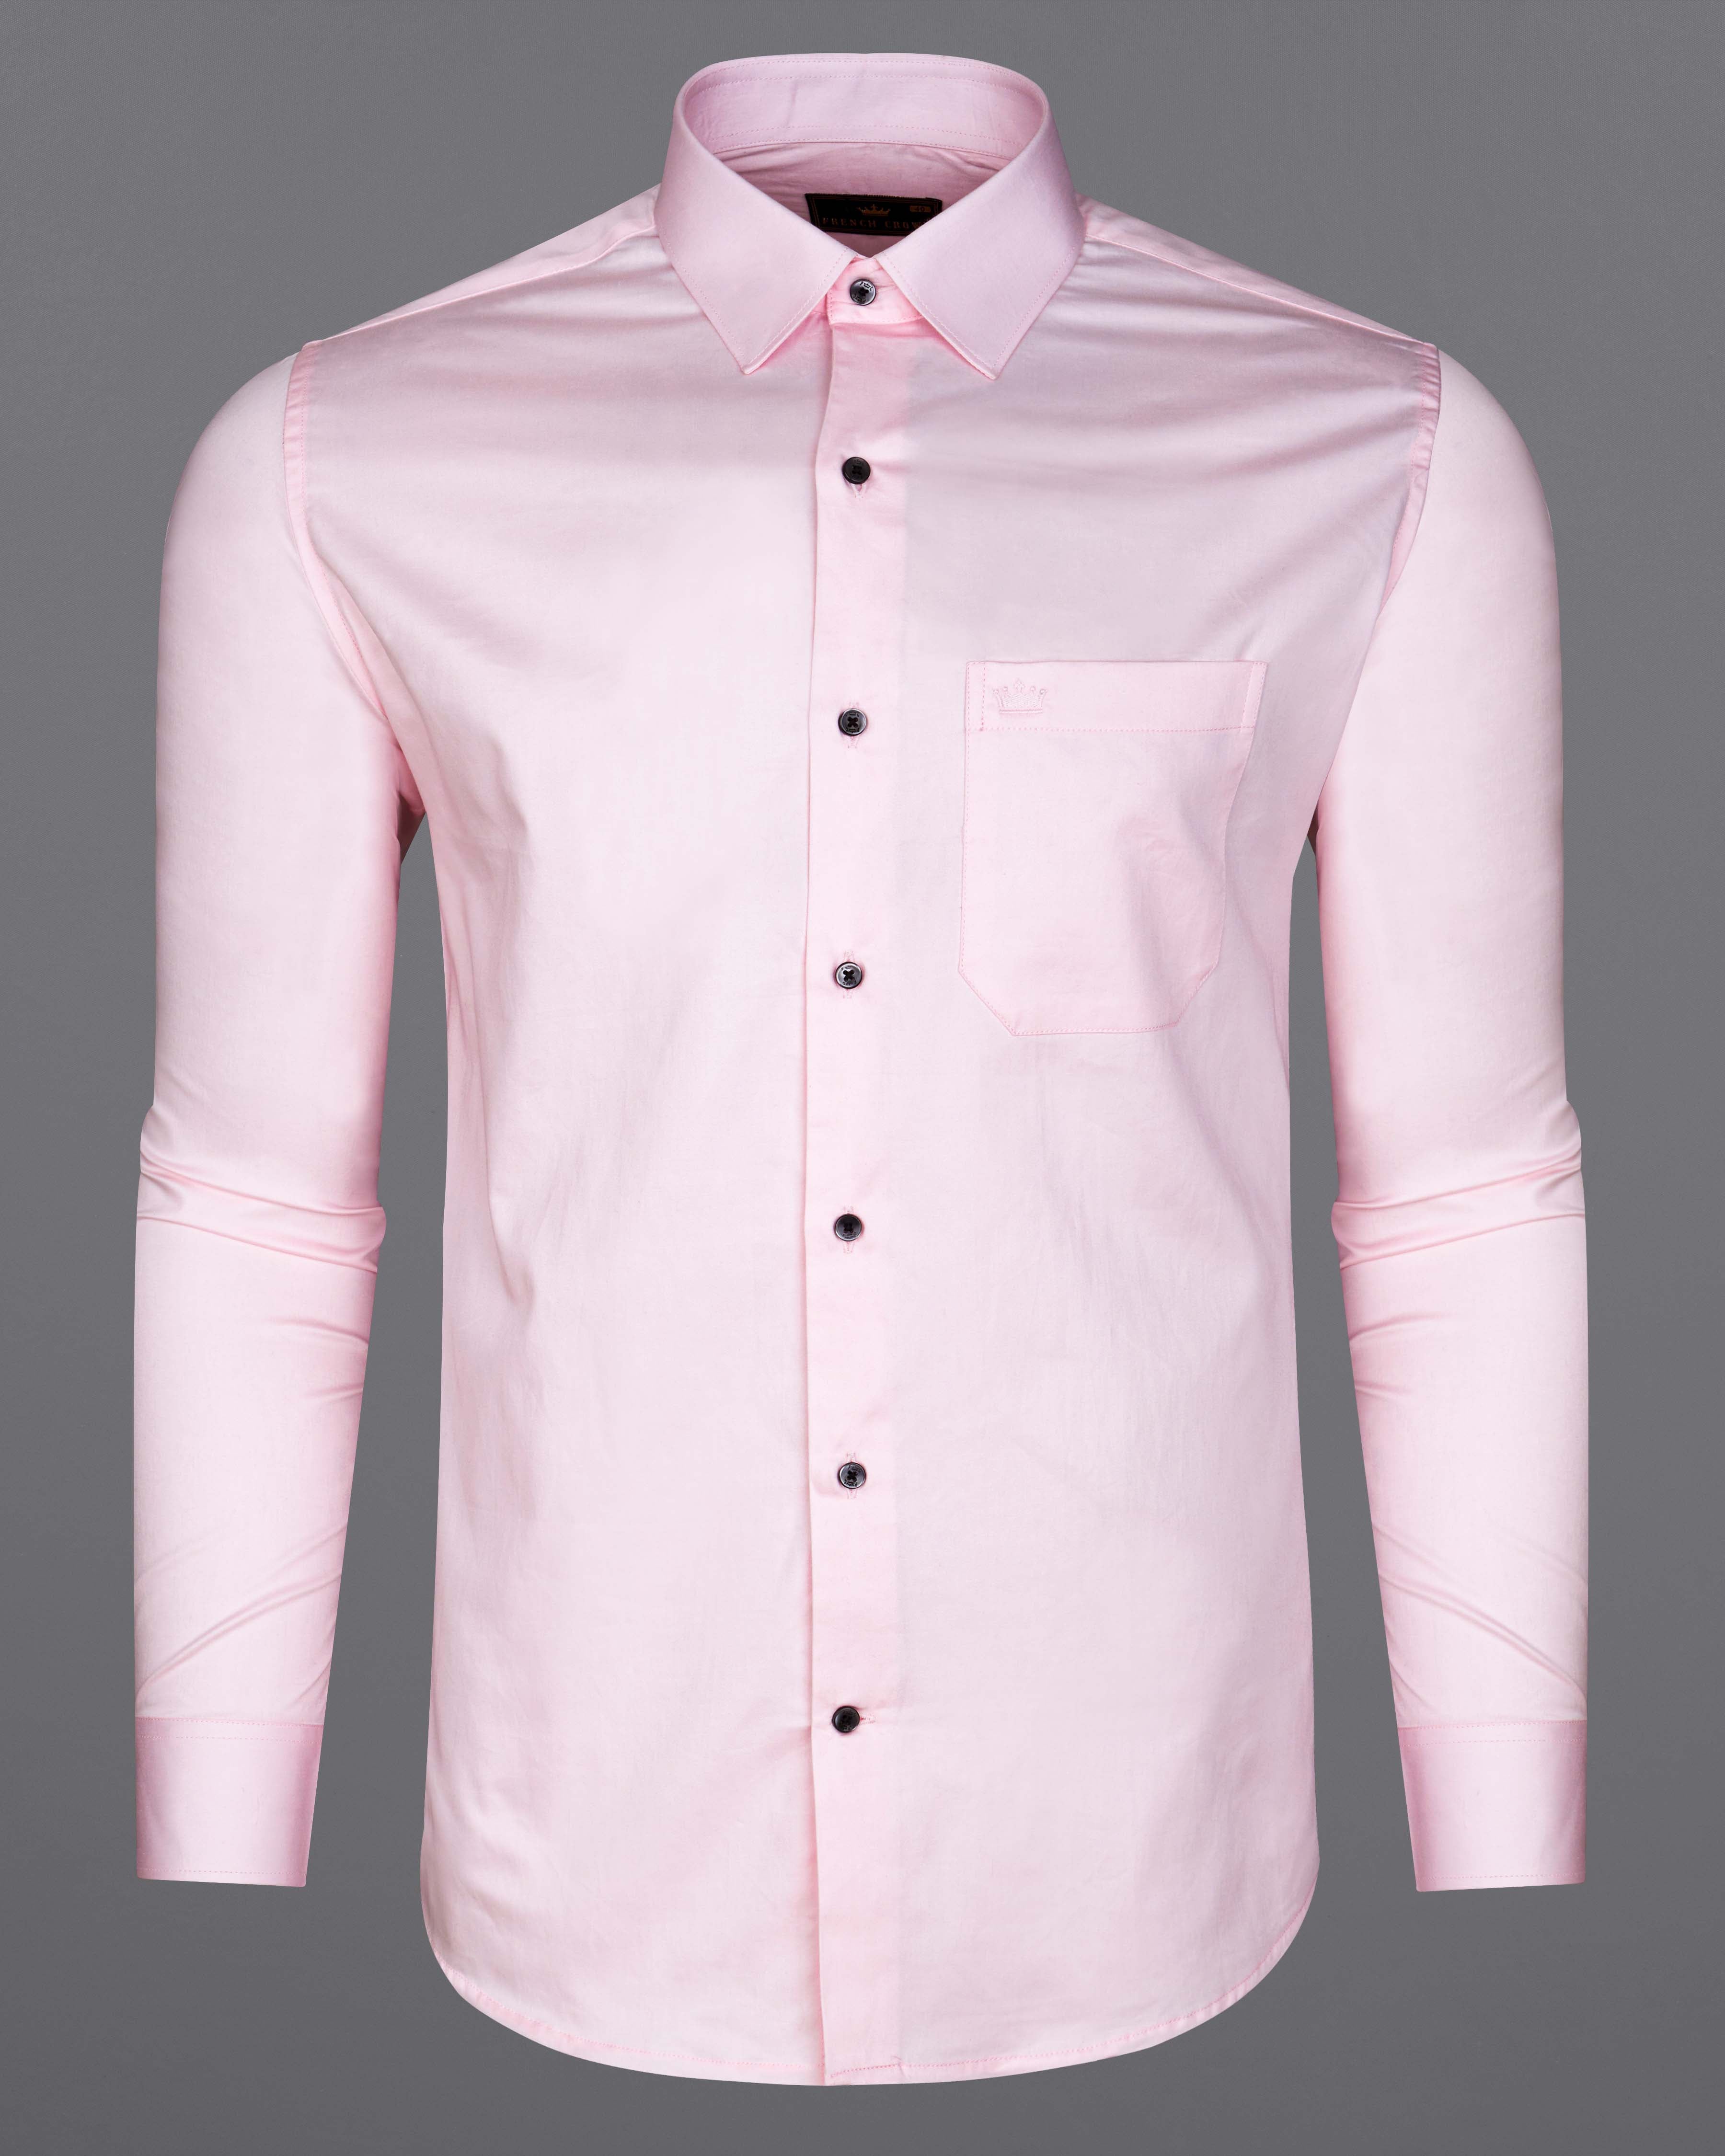 Carousel Pink Subtle Sheen Super Soft Premium Cotton Shirt 8687-BLK-38, 8687-BLK-H-38, 8687-BLK-39, 8687-BLK-H-39, 8687-BLK-40, 8687-BLK-H-40, 8687-BLK-42, 8687-BLK-H-42, 8687-BLK-44, 8687-BLK-H-44, 8687-BLK-46, 8687-BLK-H-46, 8687-BLK-48, 8687-BLK-H-48, 8687-BLK-50, 8687-BLK-H-50, 8687-BLK-52, 8687-BLK-H-52